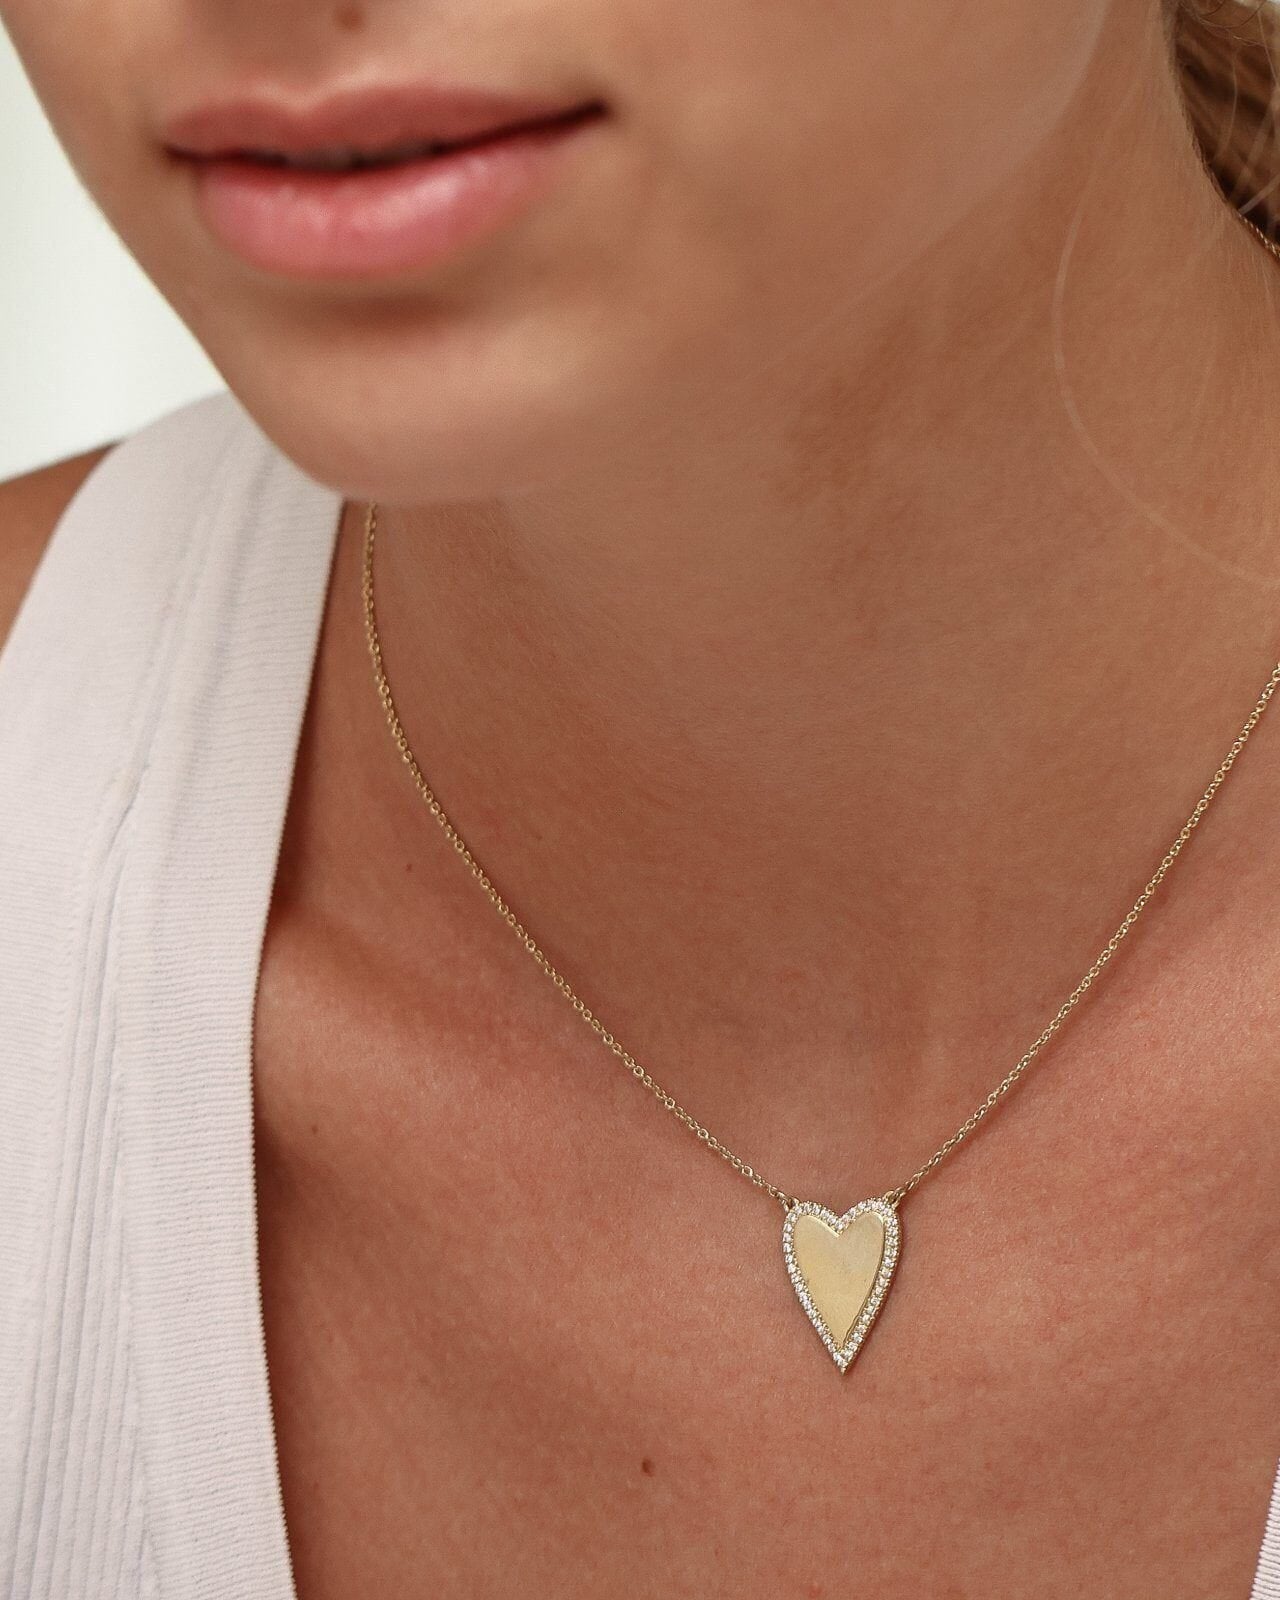 Outlined Heart Diamond Necklace - 18K Gold Vermeil Necklaces magal-dev 